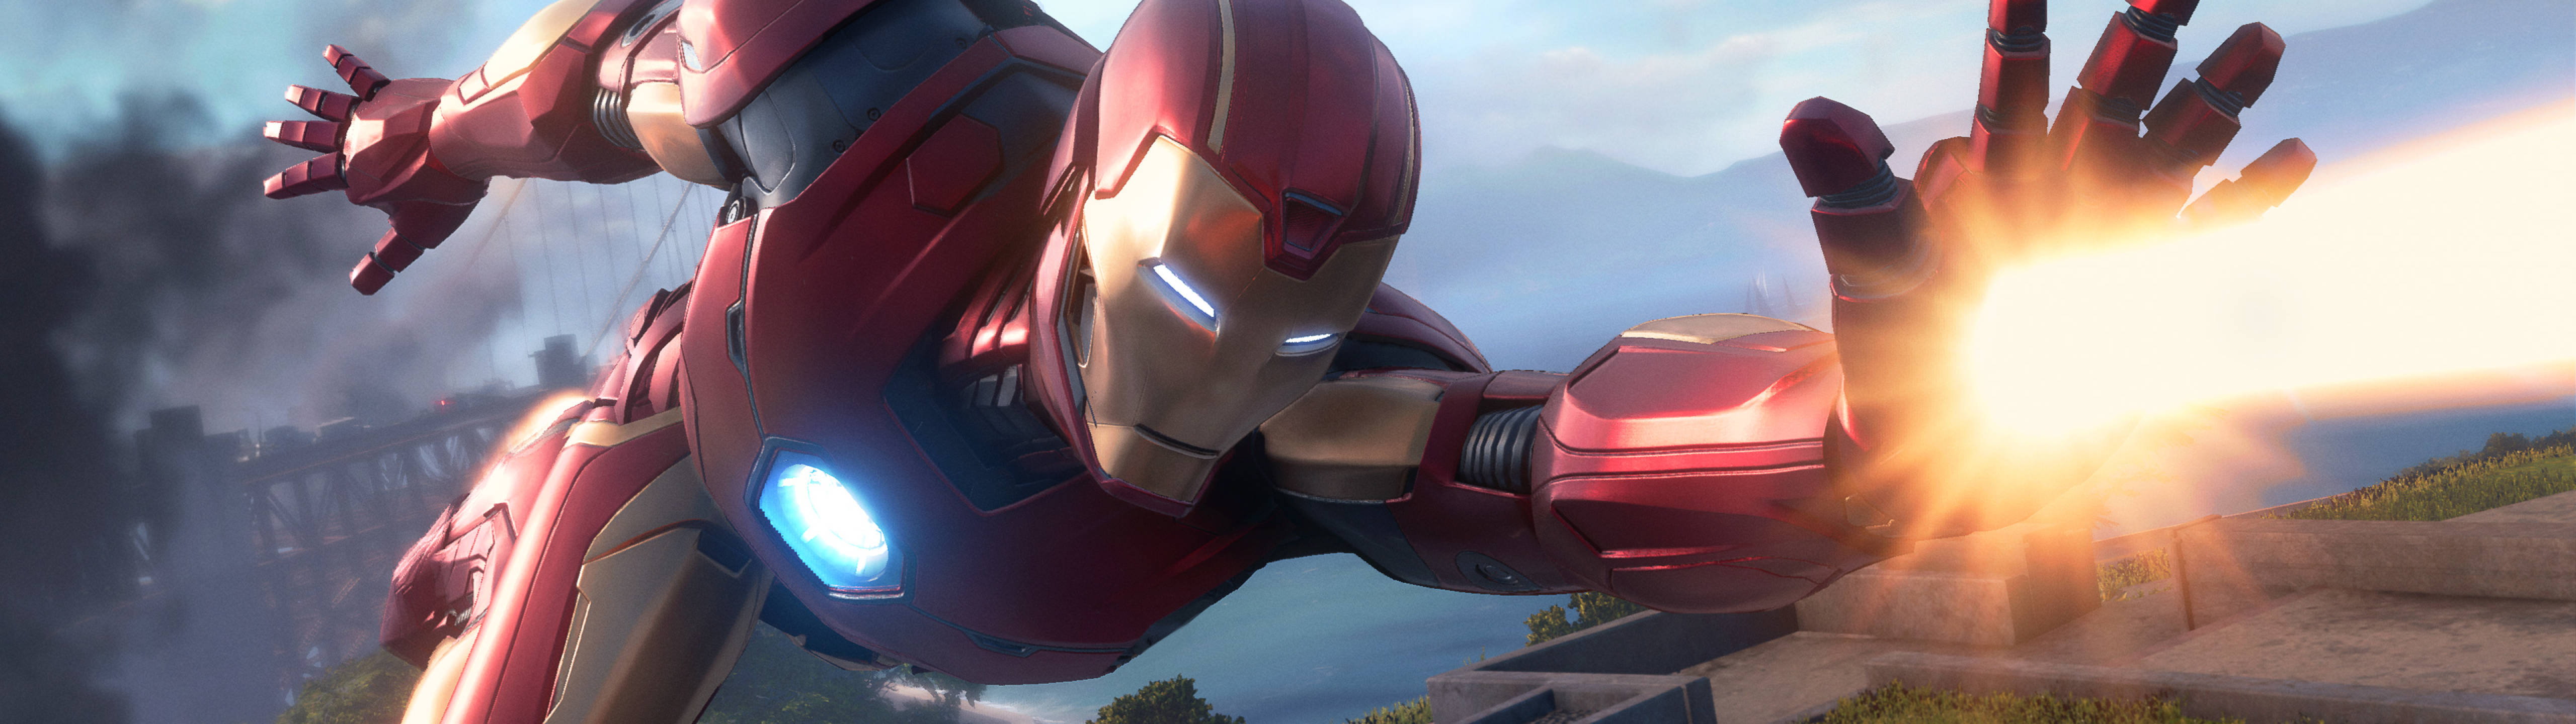 Marvel's Ironman Shooting 5120 X 1440 Wallpaper